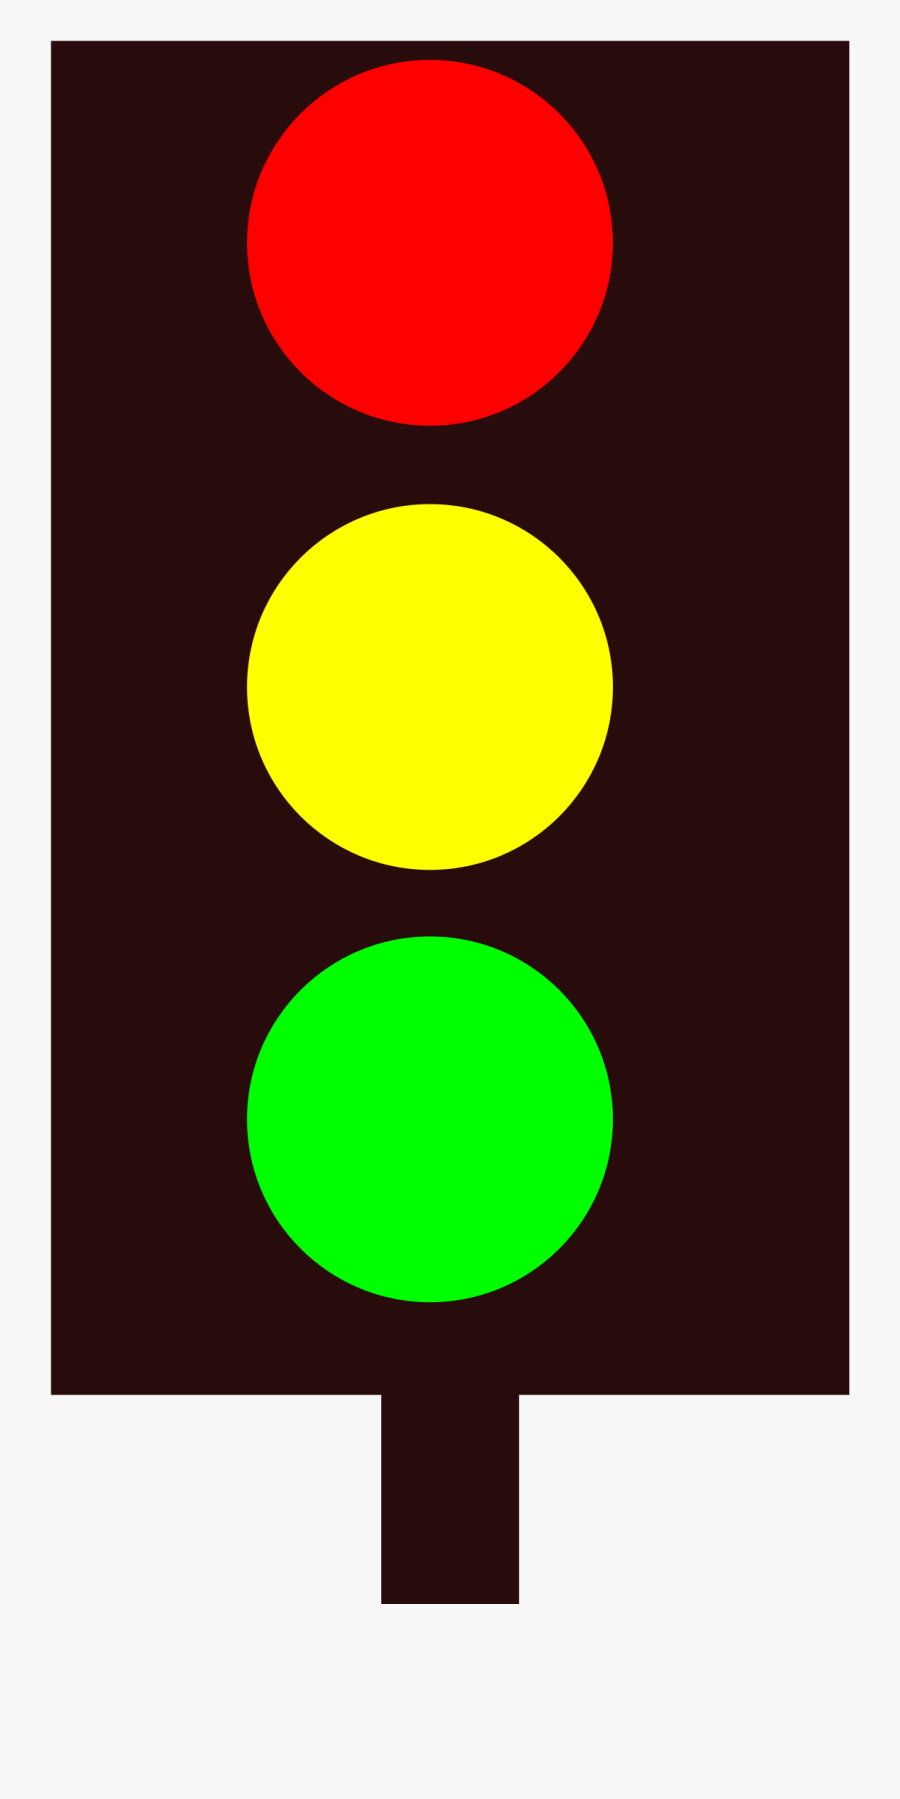 Traffic Light Clipart Gambar - Traffic Lights Clip Art, Transparent Clipart